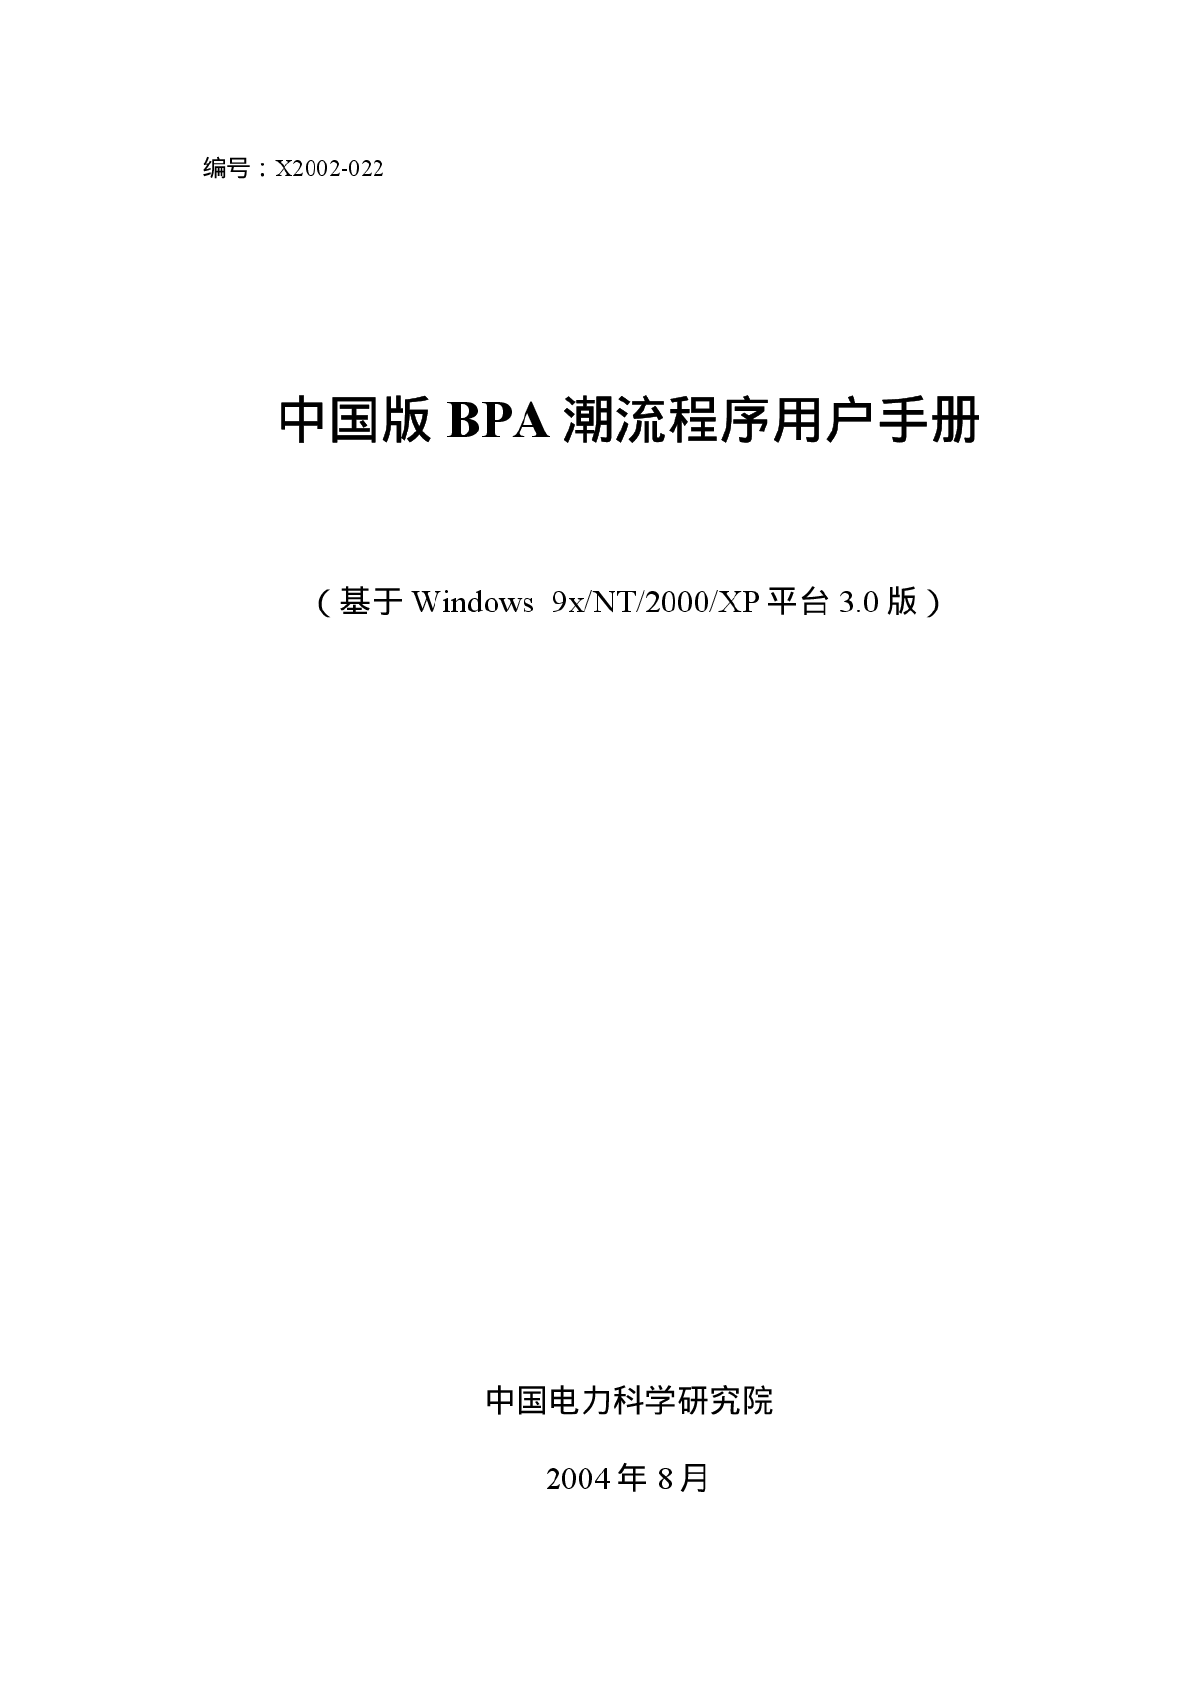 BPA中国版BPA稳定程序用户手册-图一